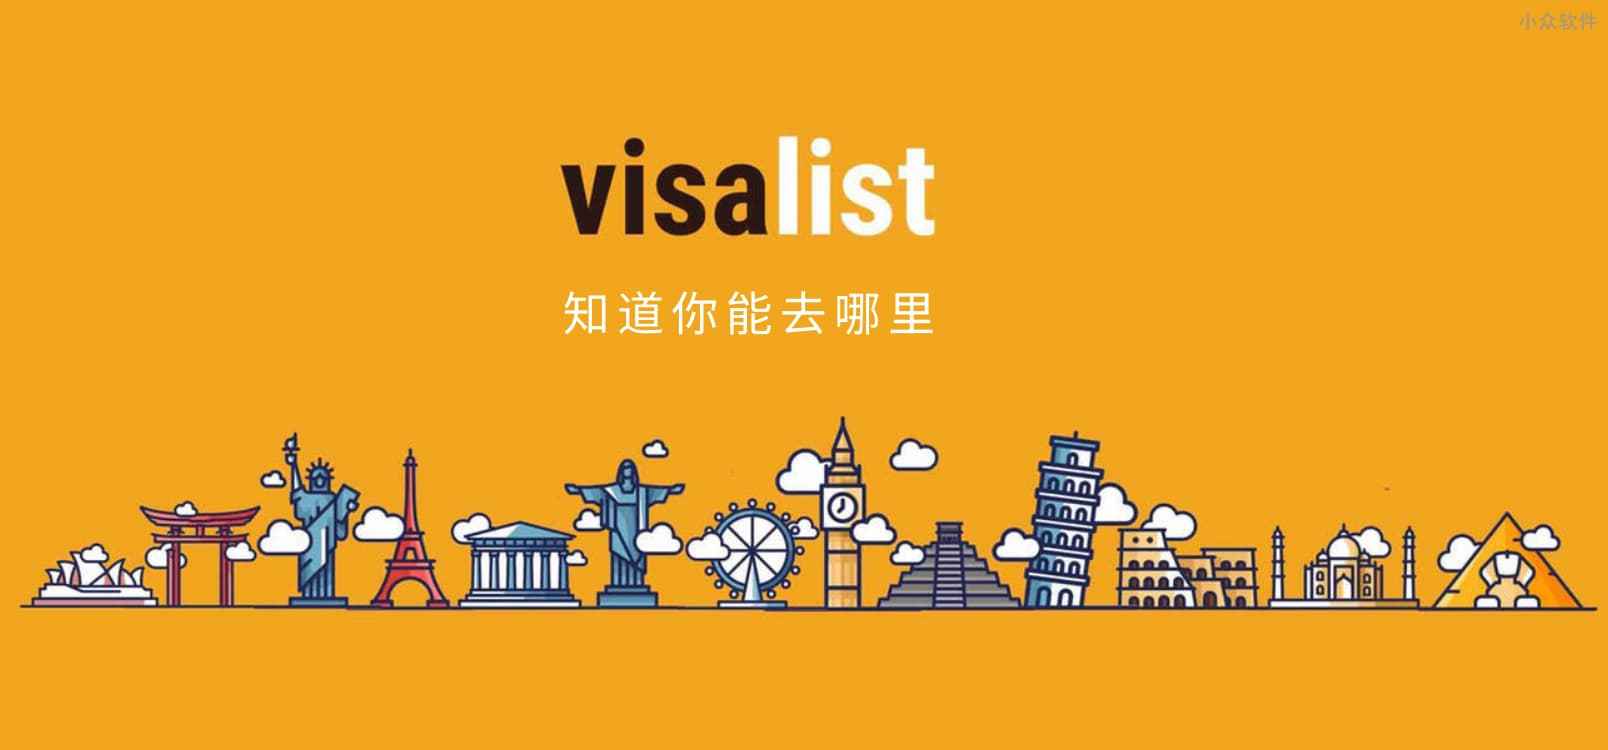 VisaList - 旅行者全球签证指南，适用于中国 [Web] 1